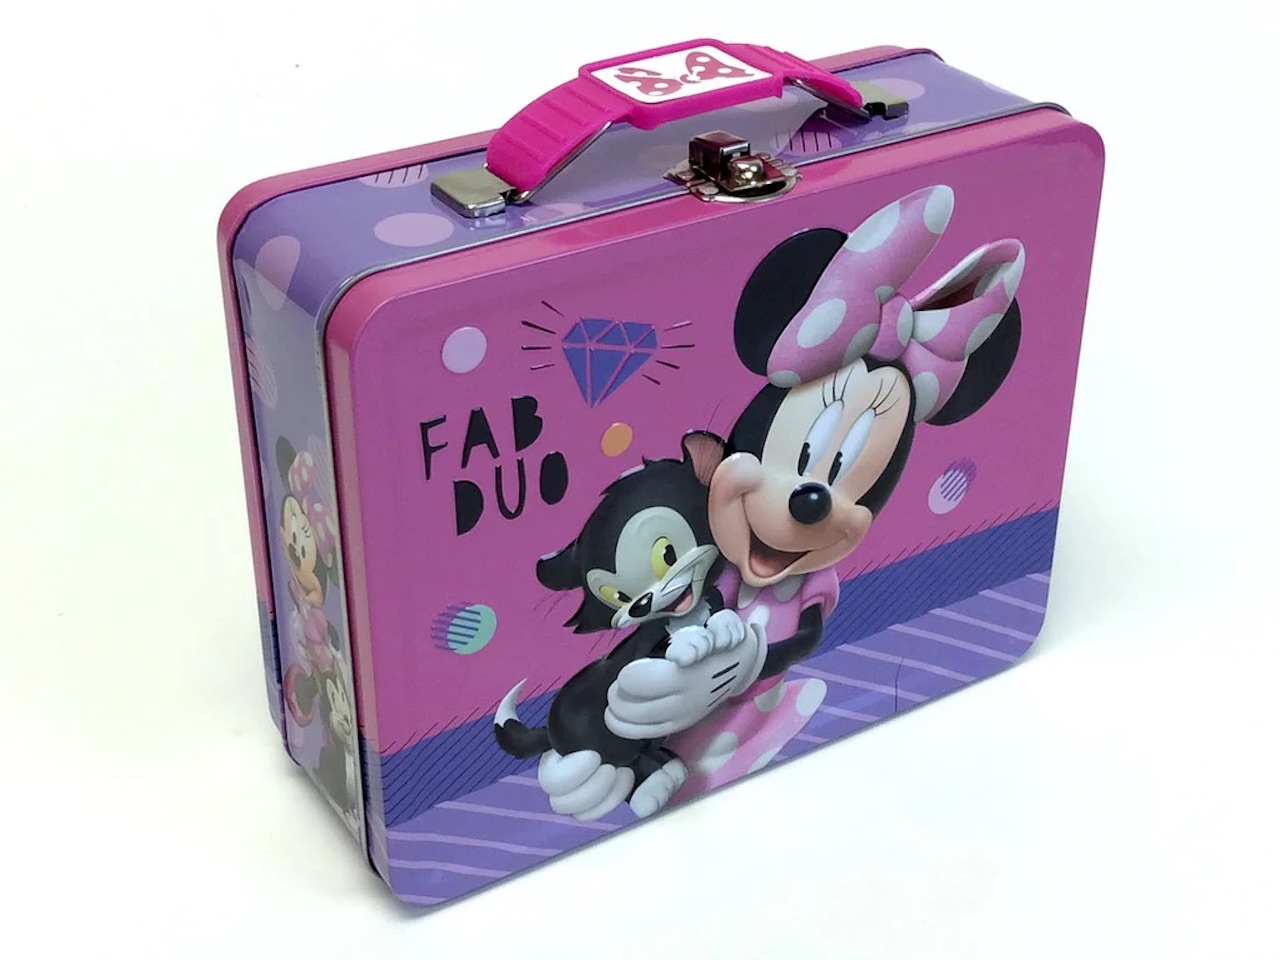 Disney Princess Shine Lunchbox - Multi, One size, Women's